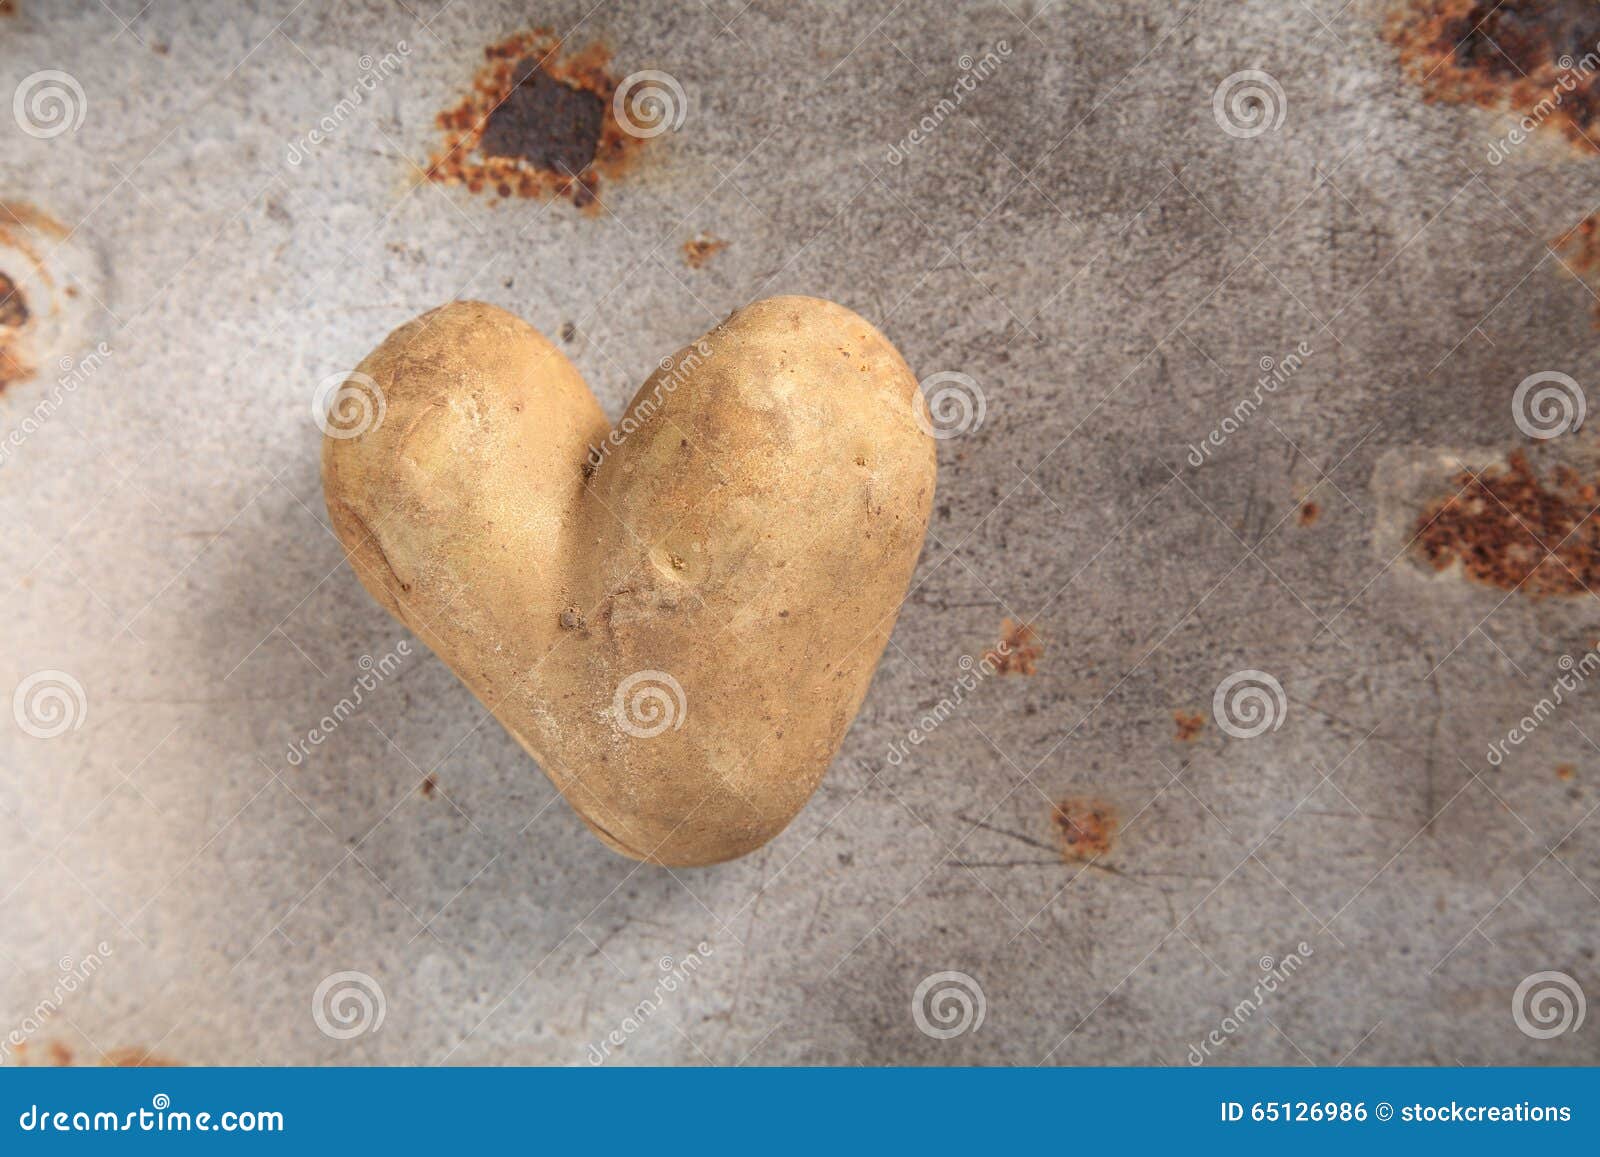 fun double heart d potato or spud